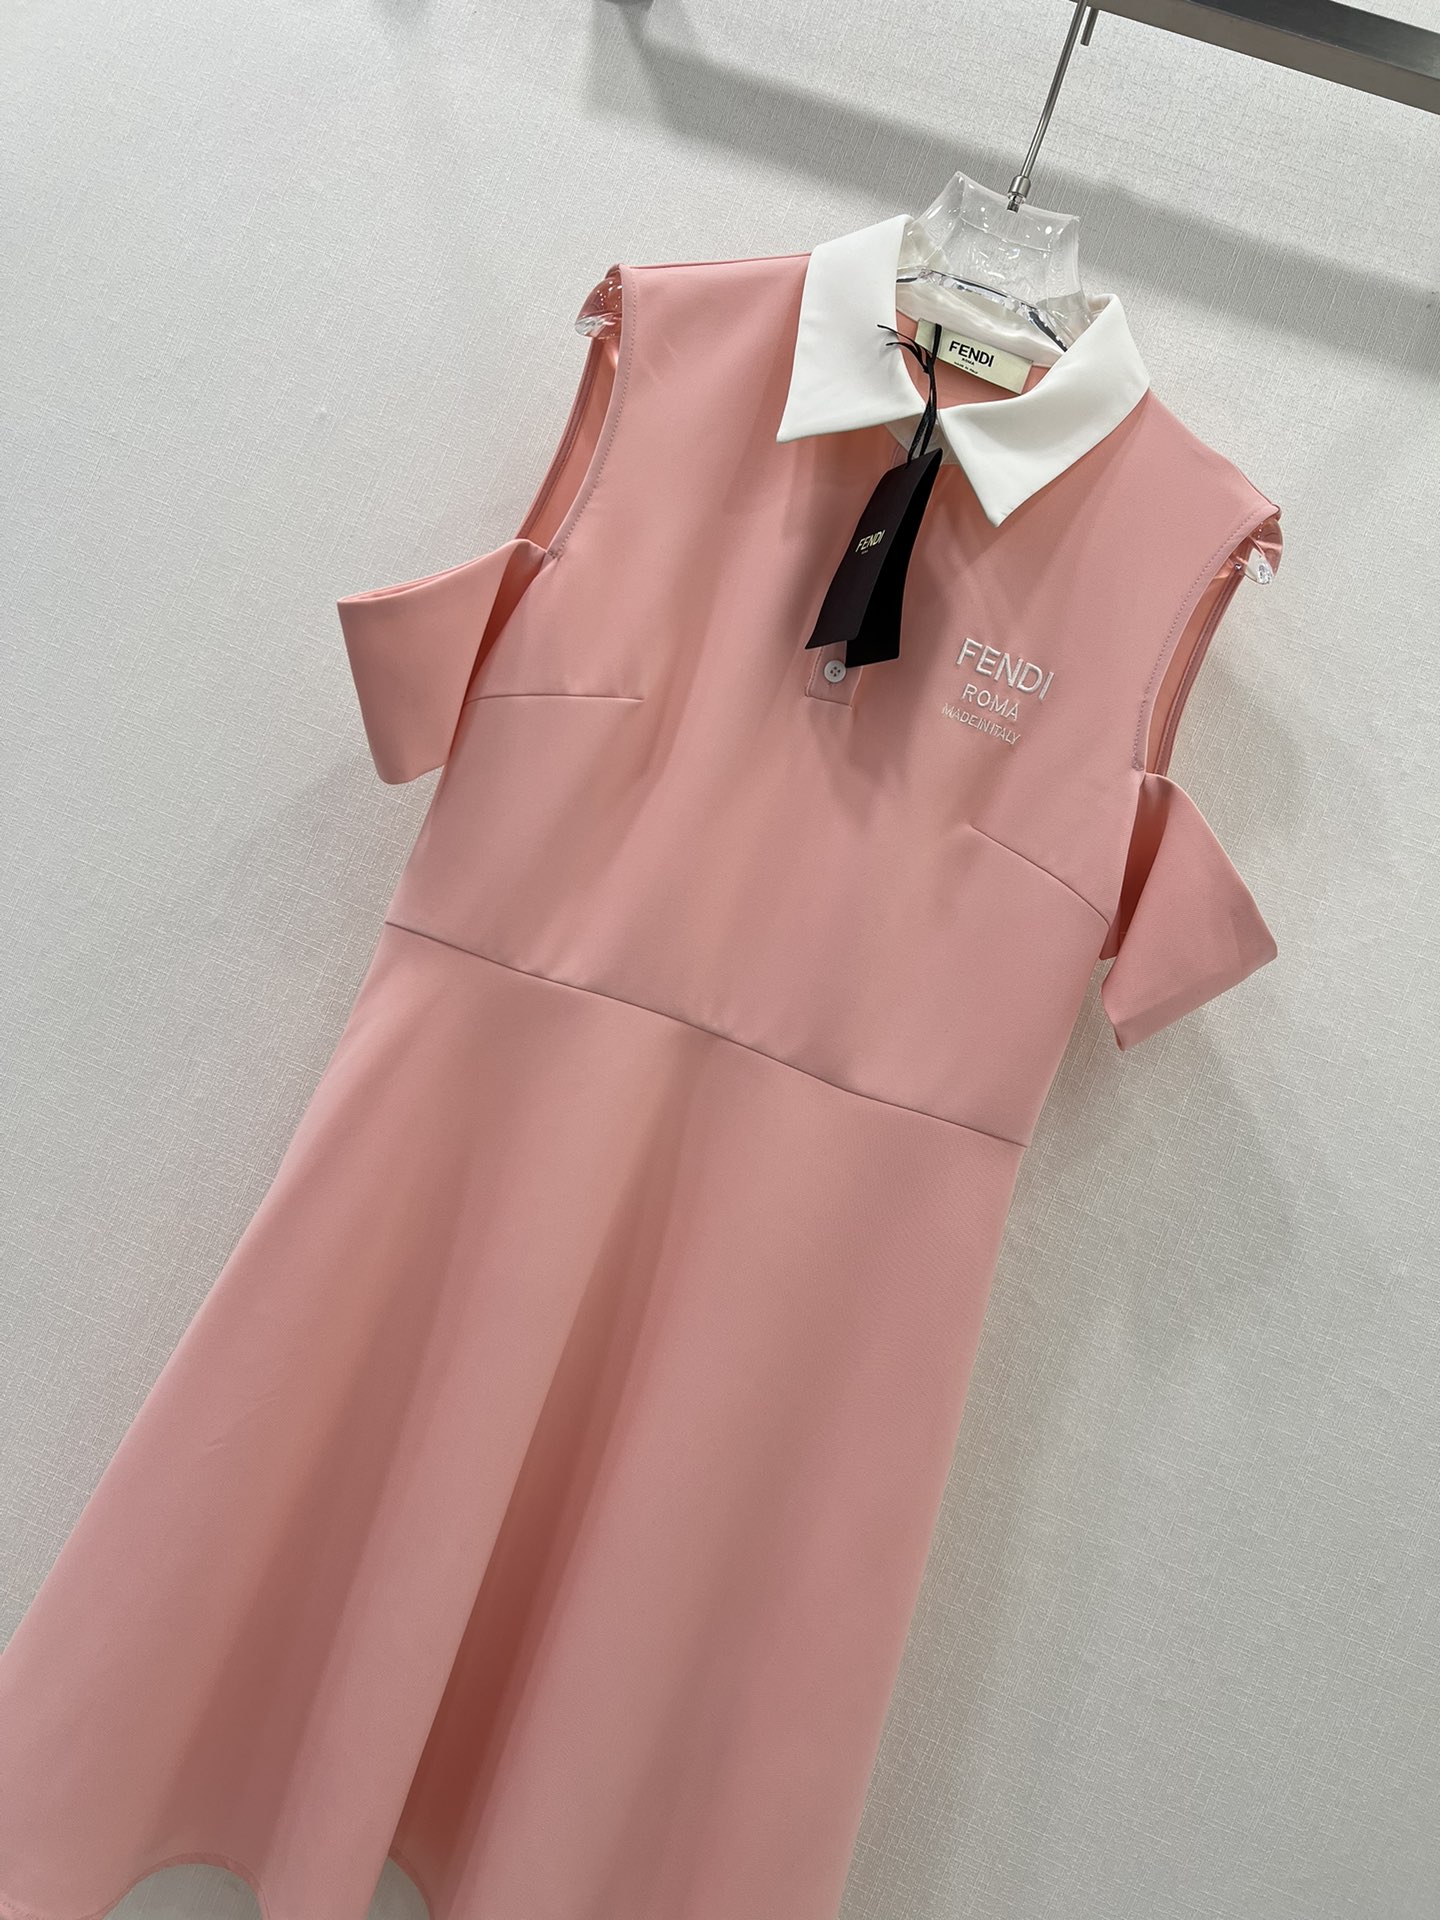 fendi キッズ ワンピーススーパーコピー 魅力的なスタイル スカート セクシー 優雅 高級品 ピンク_5